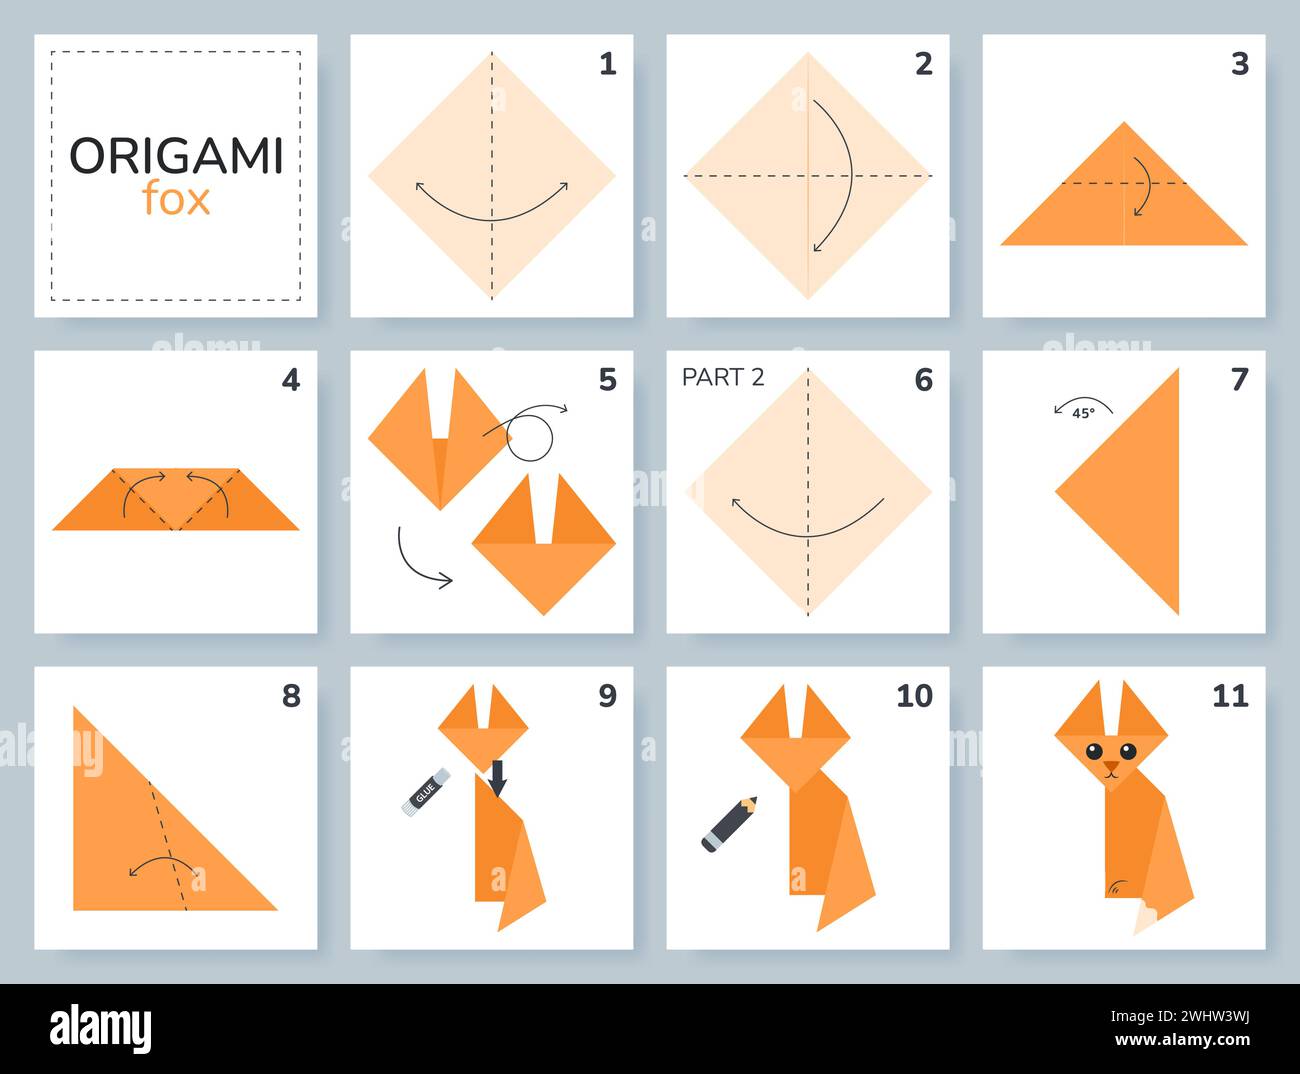 Origami tutorial for kids. Origami cute fox. Stock Vector